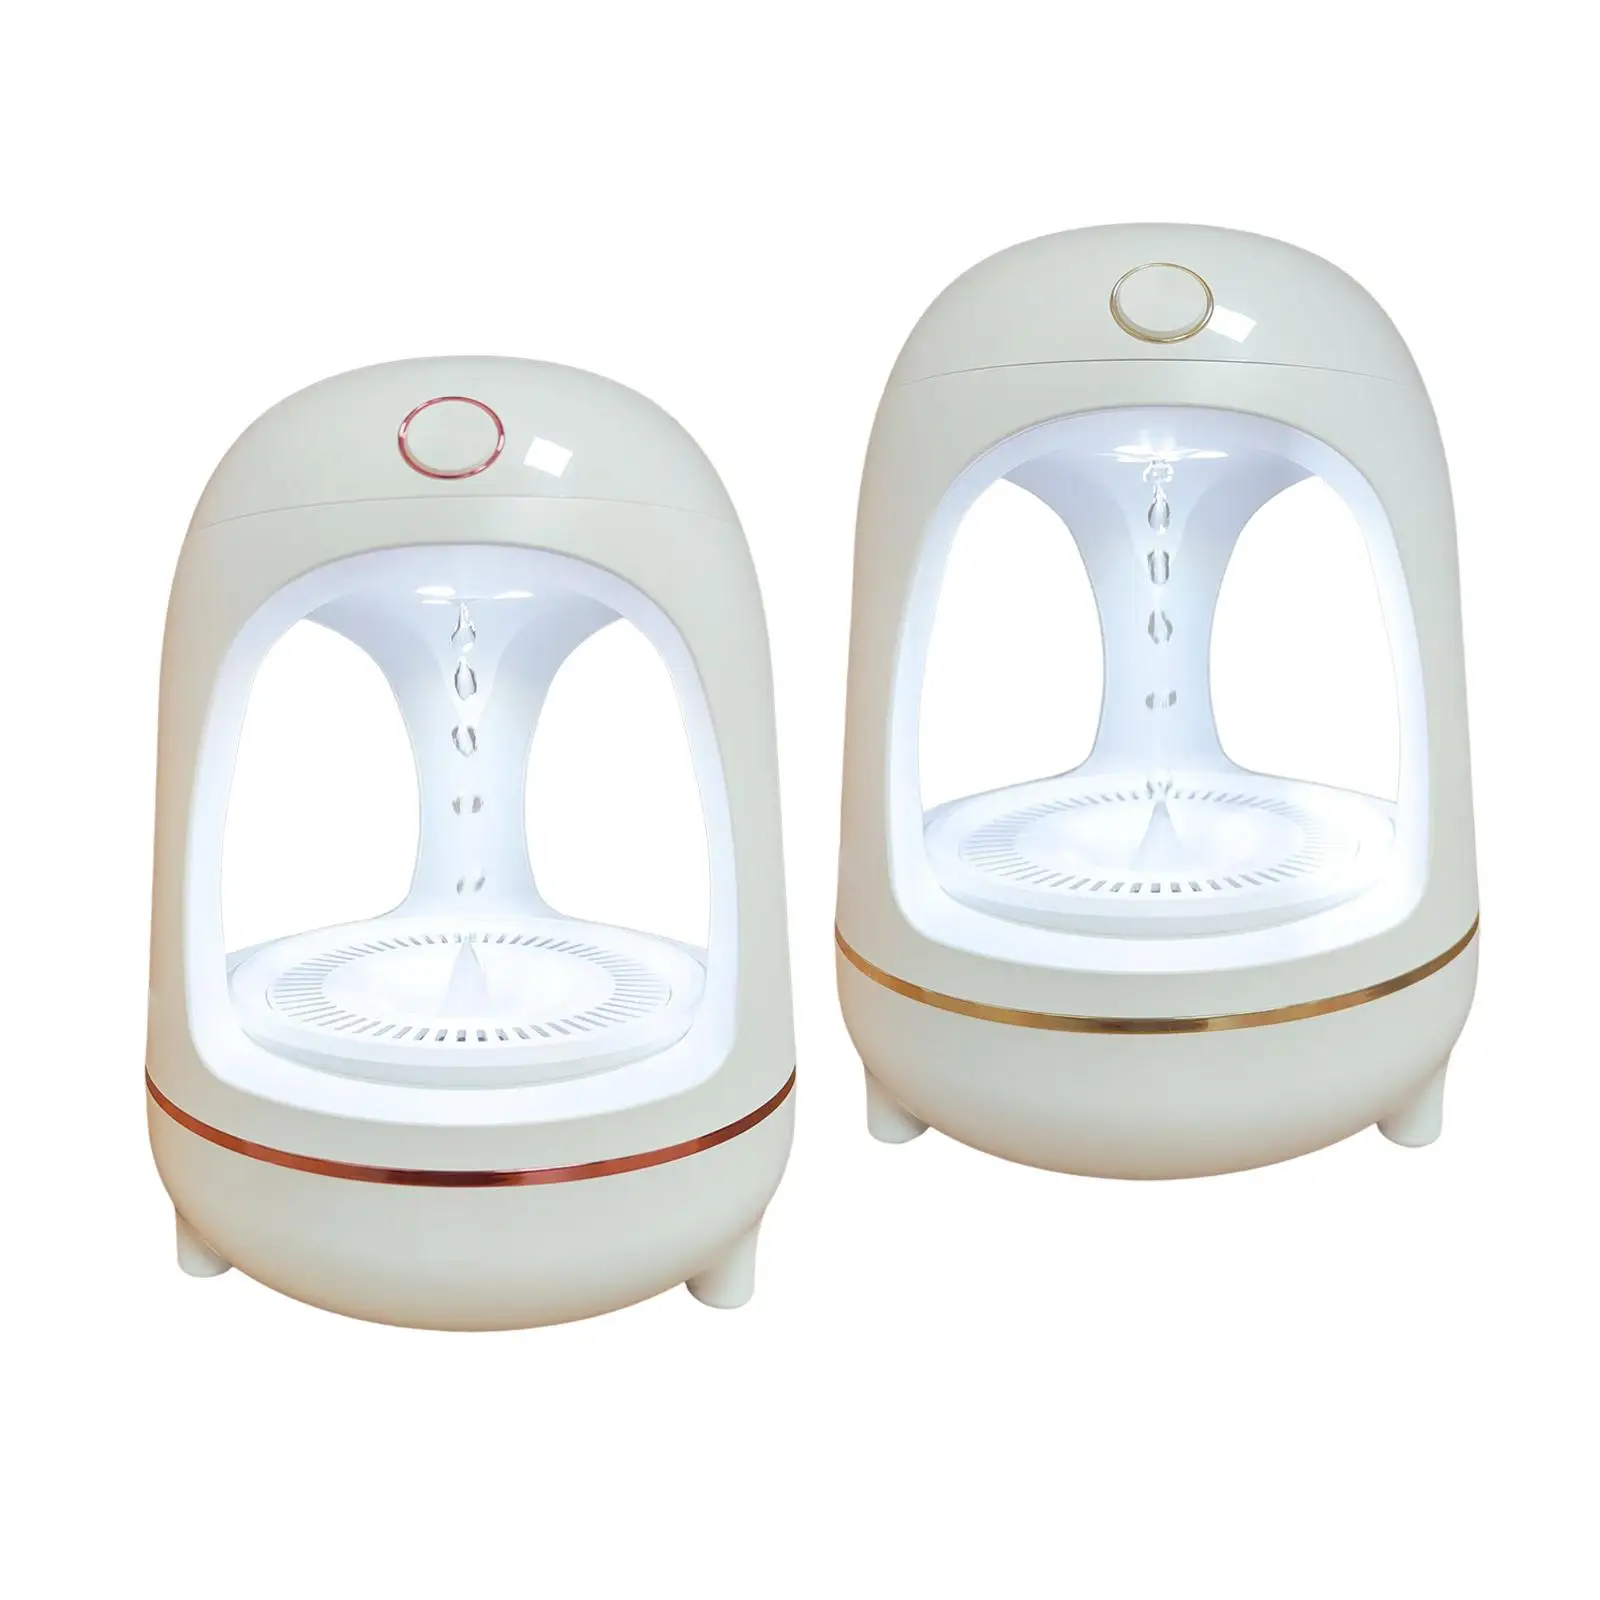 Desktop Air Humidifier Antigravity Water Droplet Countercurrent 700ml Night Light for Hotel Home Bedroom NightStand